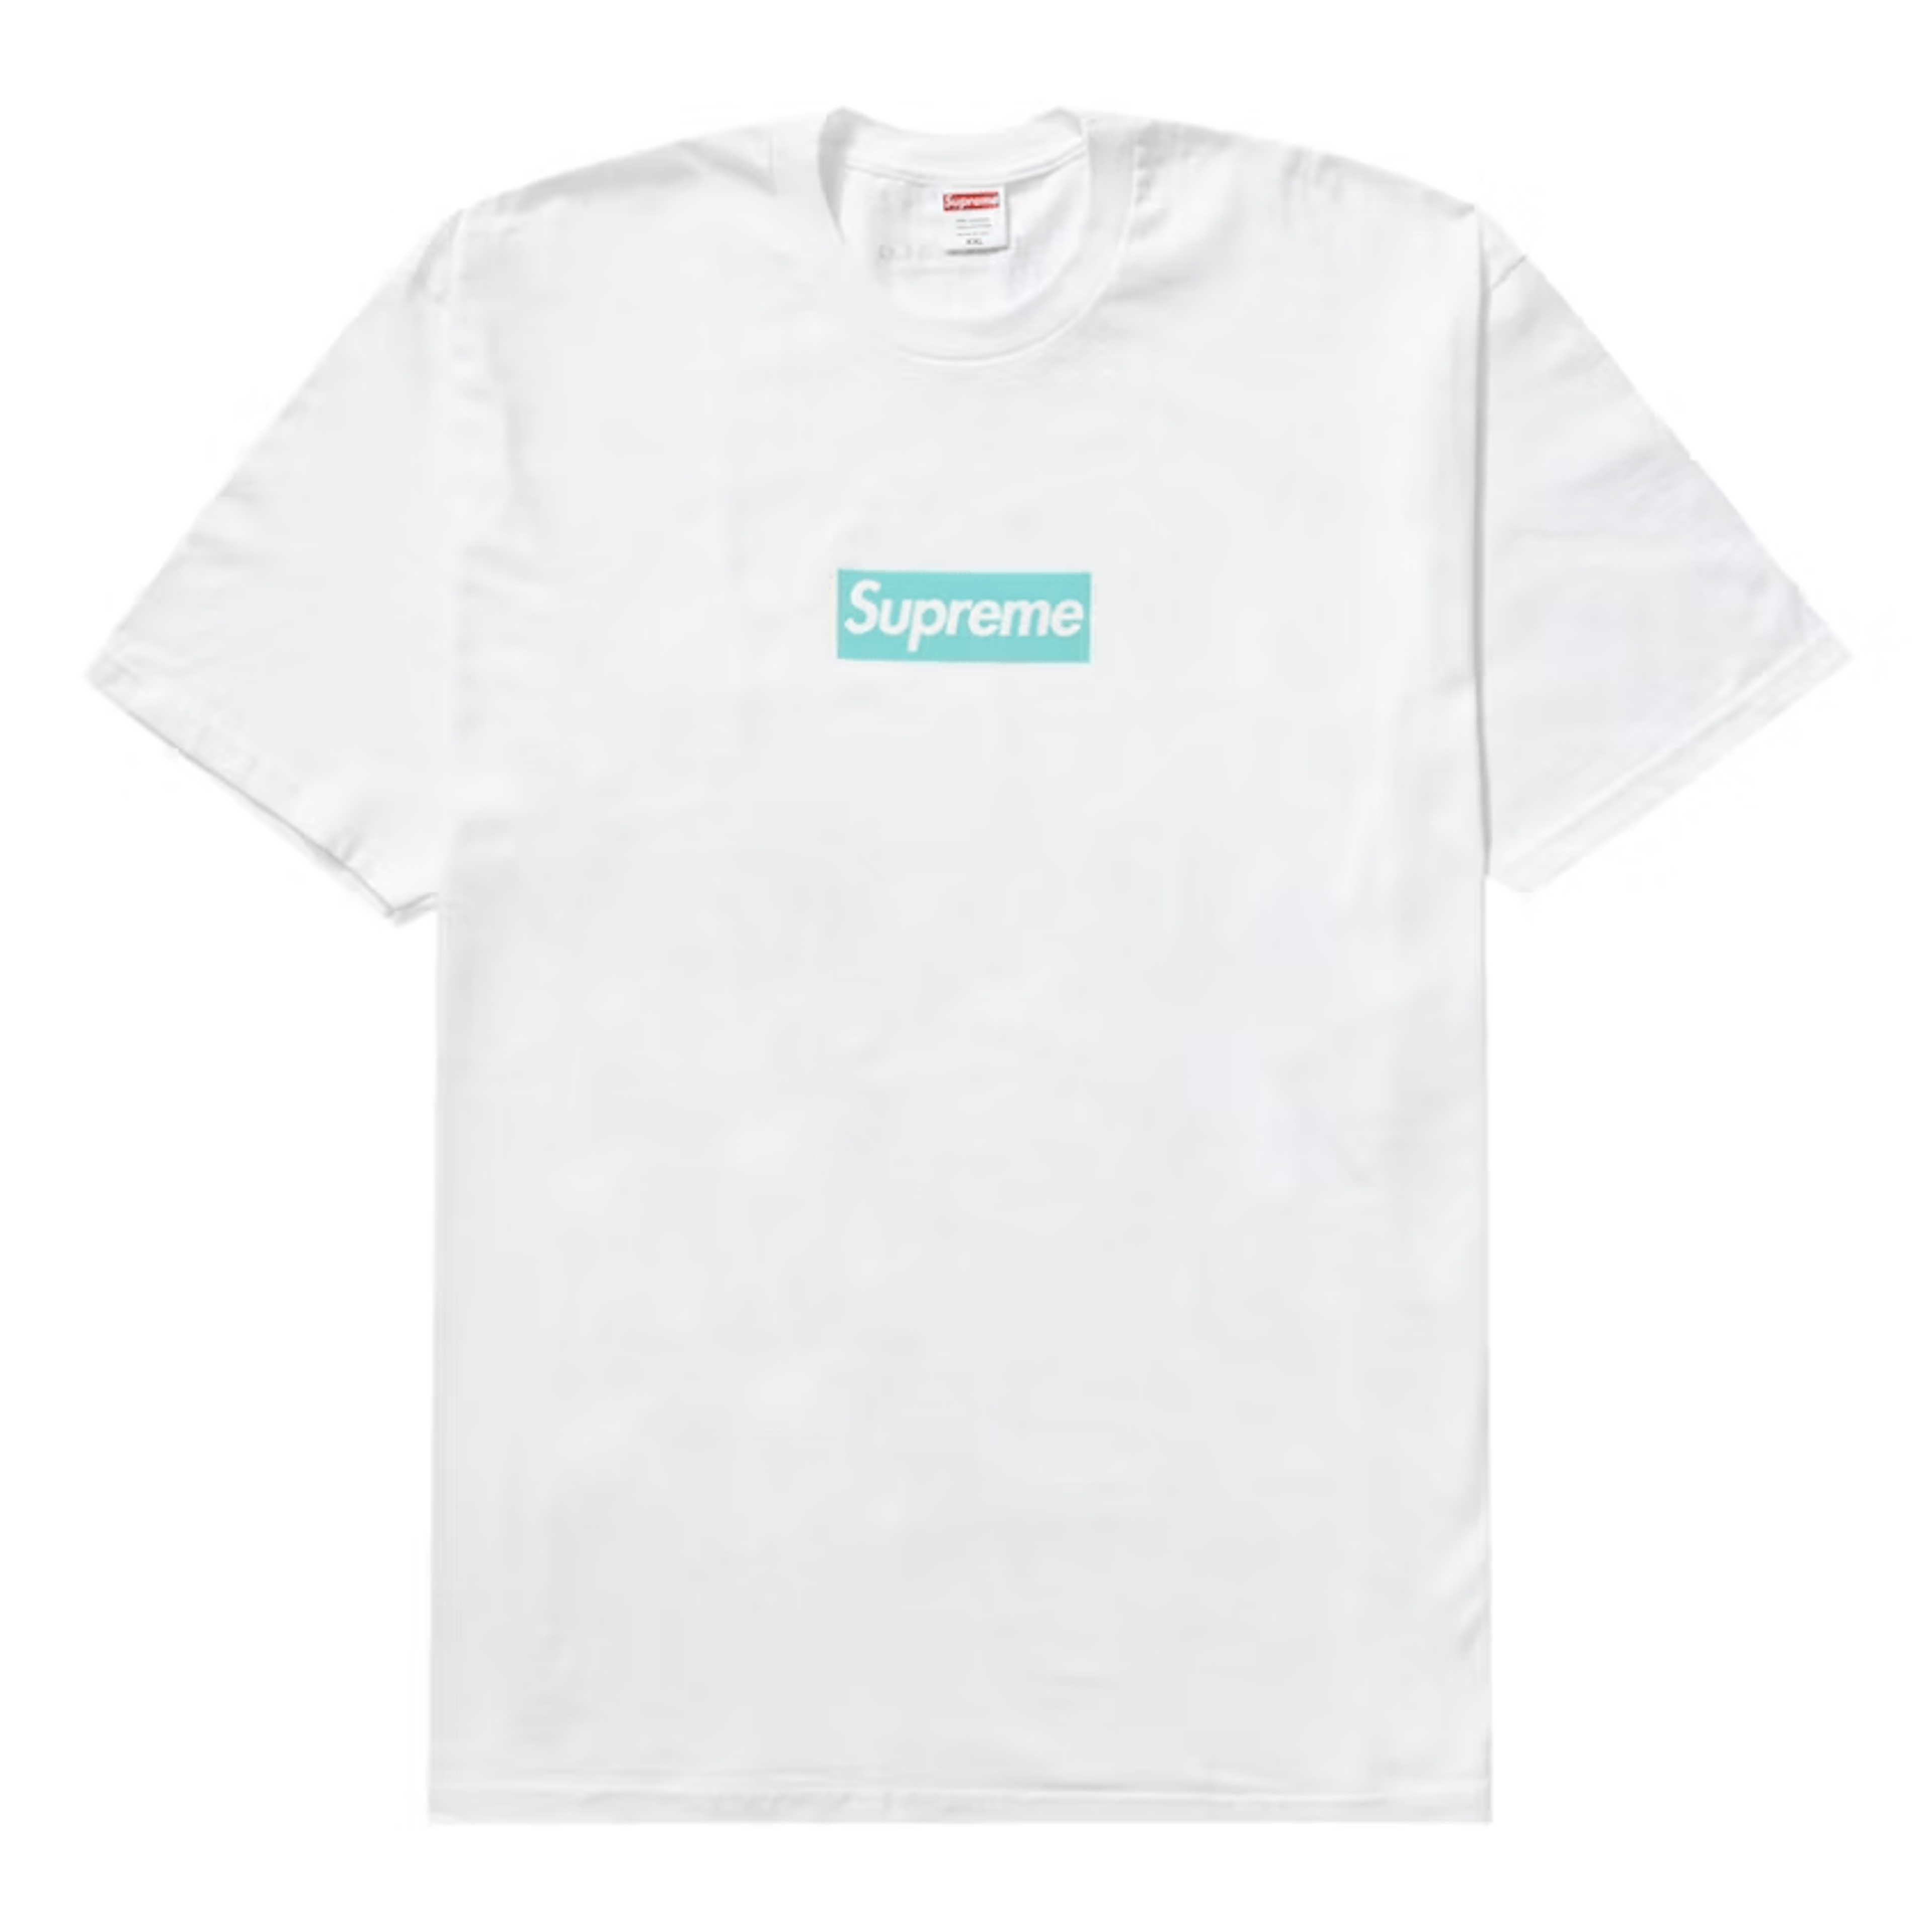 Supreme Tiffany & Co. Box Logo Short Sleeve Tee Shirt White